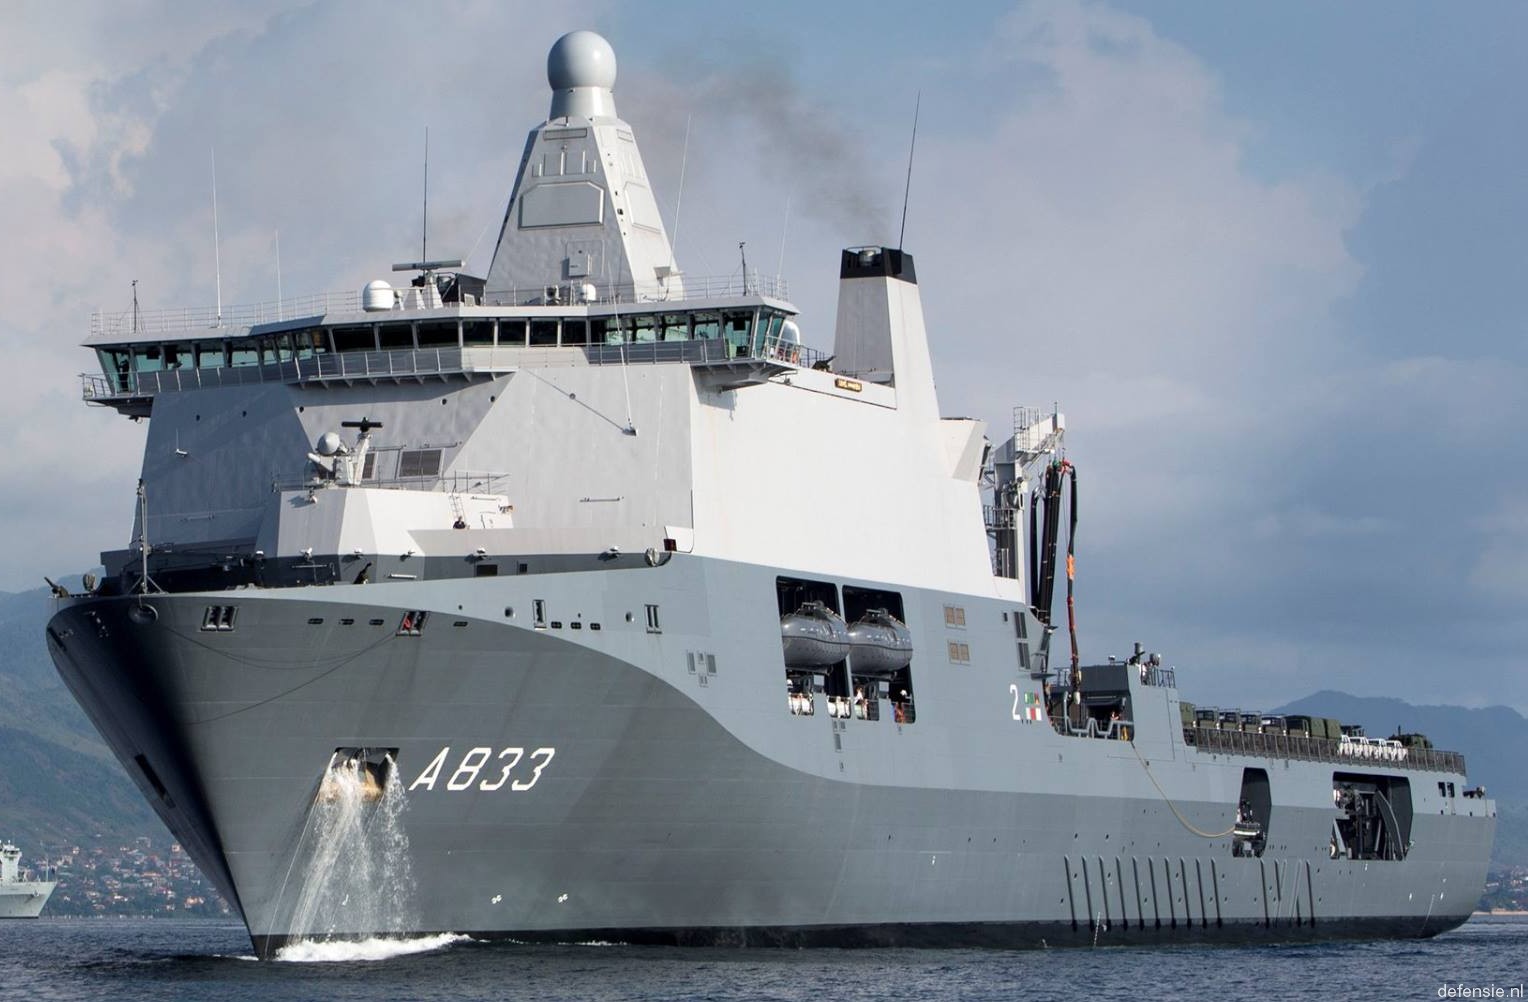 a-833 hnlms karel doorman joint support ship royal netherlands navy koninklijke marine 41 homeport den helder